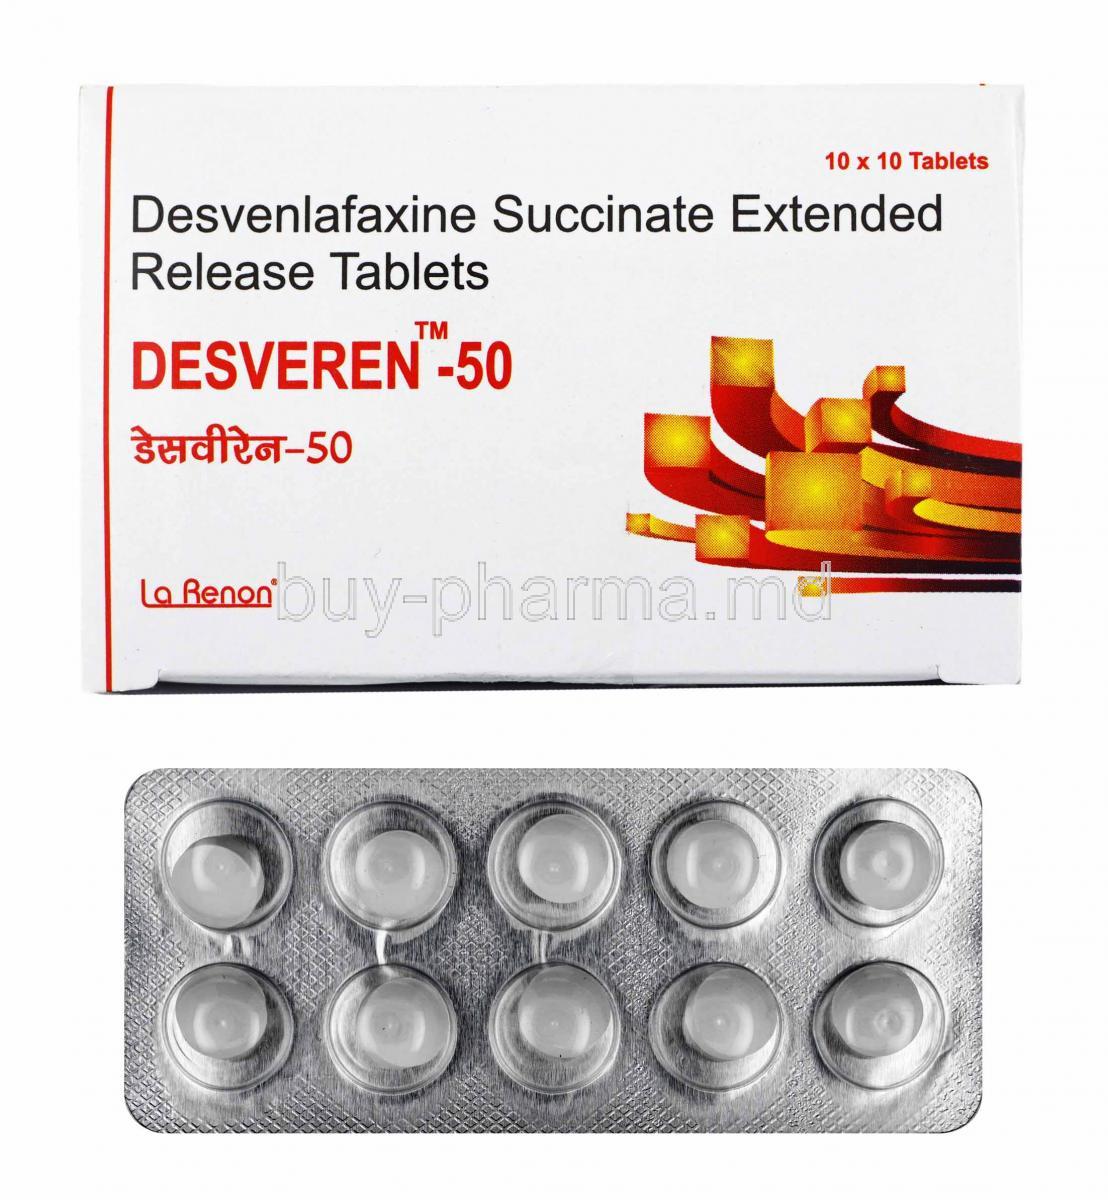 Desveren, Desvenlafaxine 50mg box and tablets